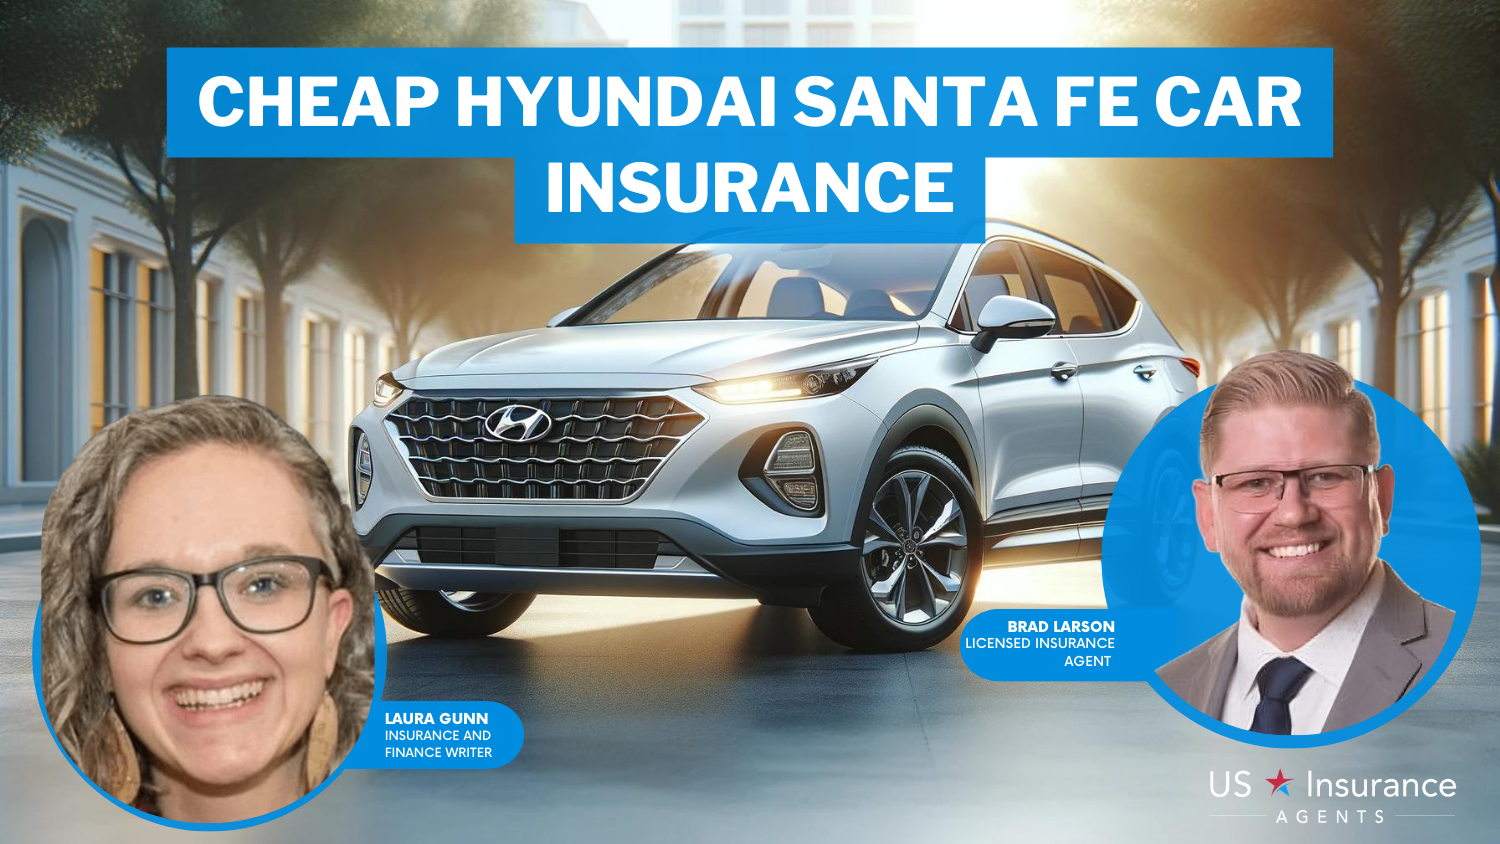 Cheap Hyundai Santa Fe Car Insurance: State Farm, USAA, and Progressive